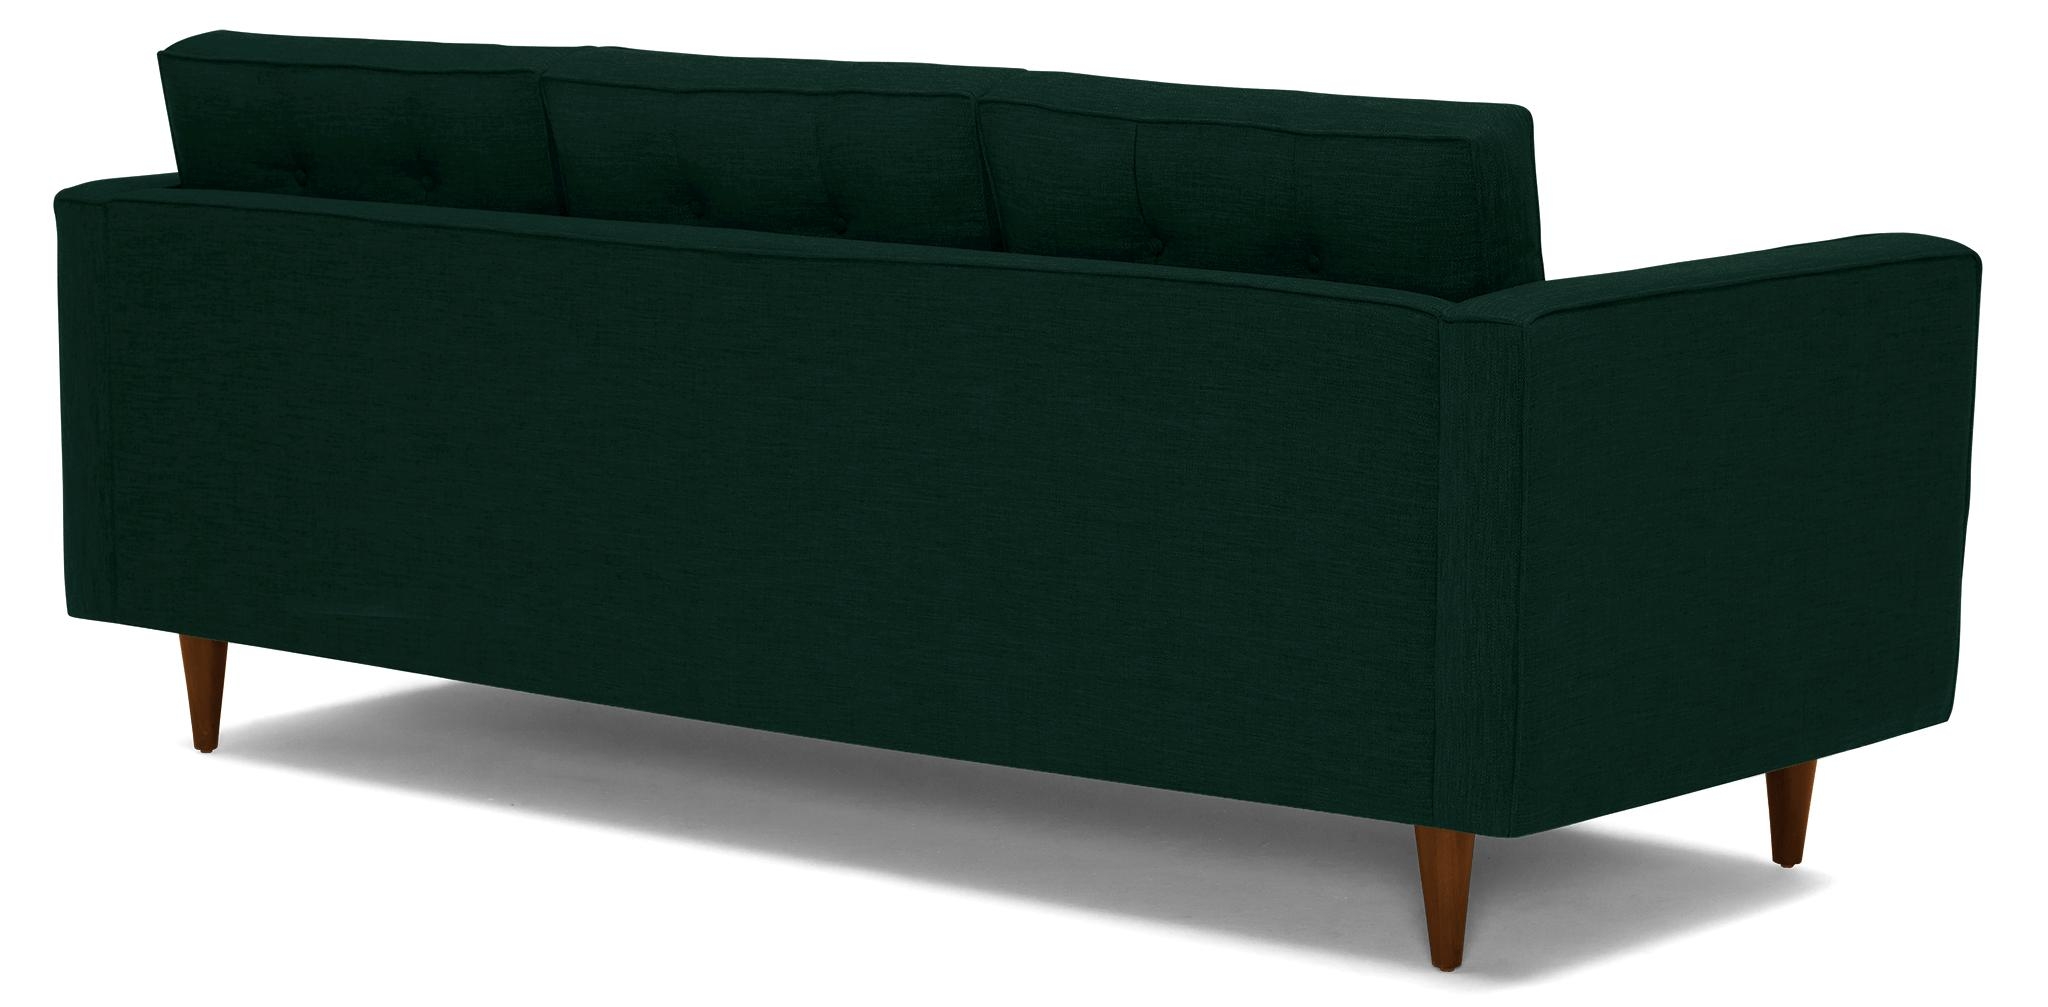 Green Braxton Mid Century Modern Sofa - Royale Evergreen - Mocha - Image 3